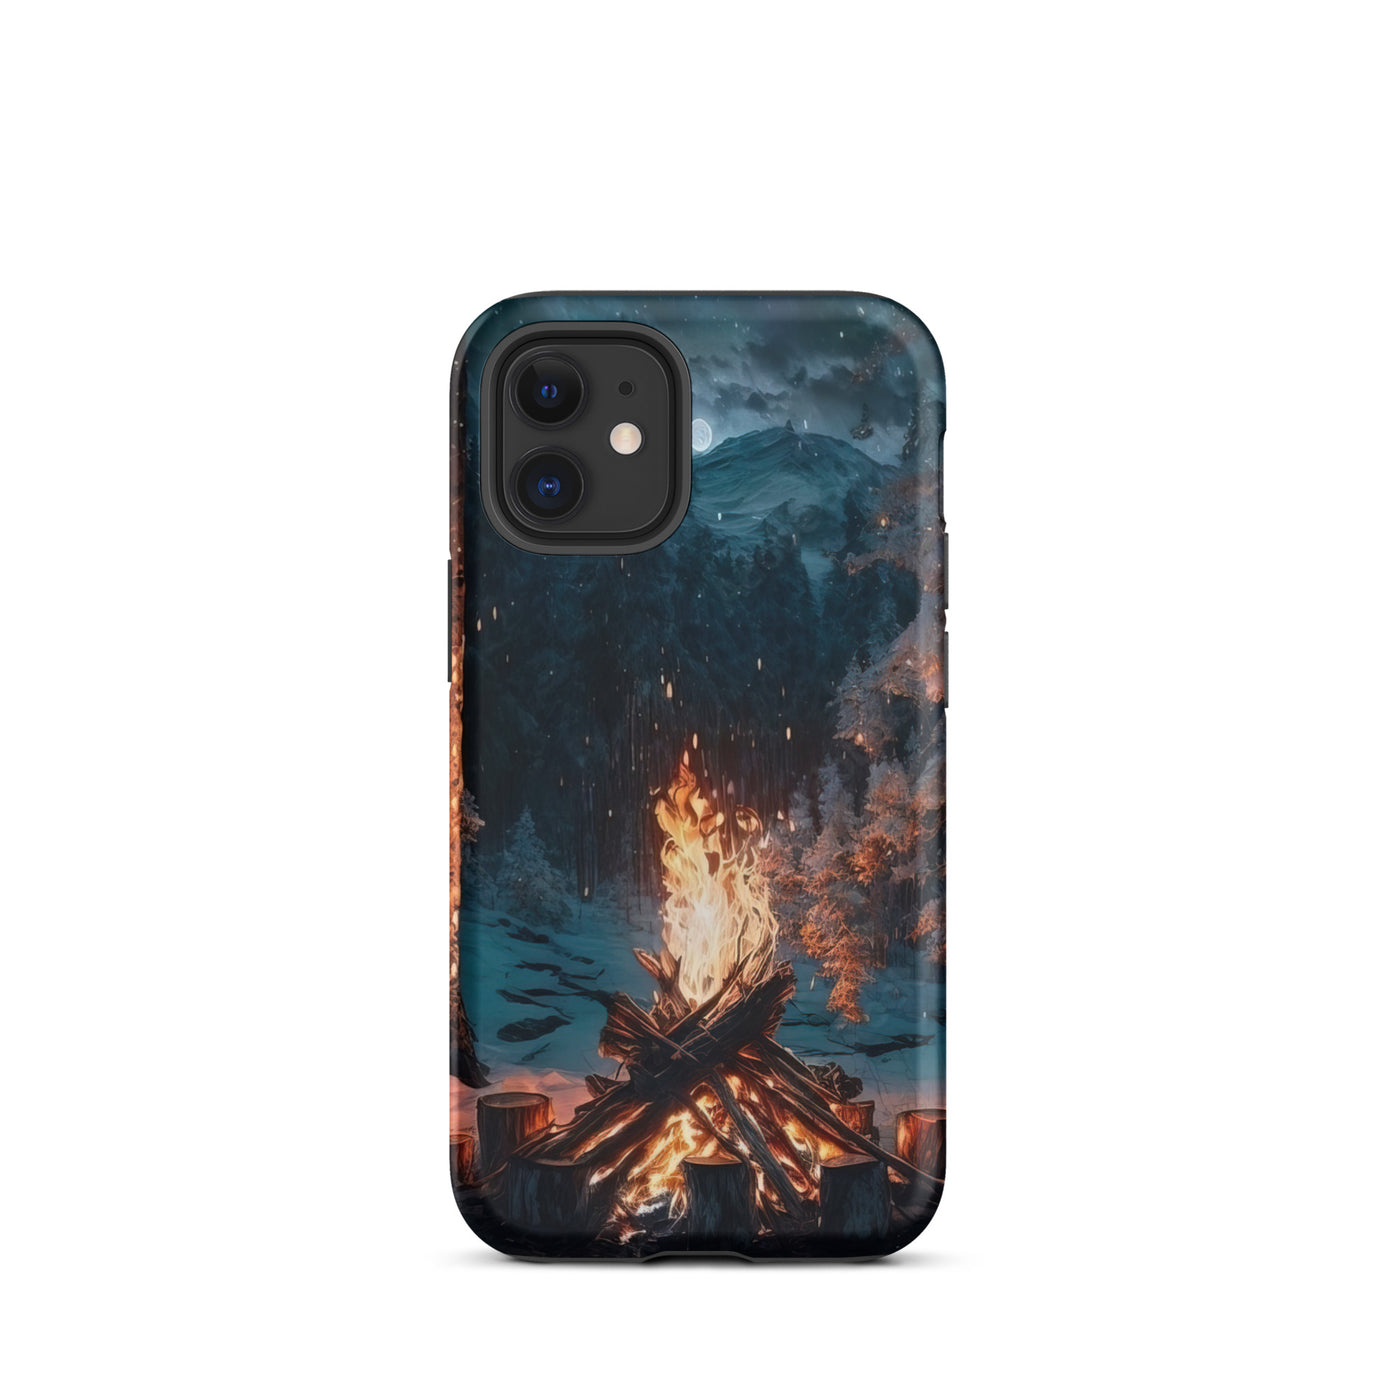 Lagerfeuer beim Camping - Wald mit Schneebedeckten Bäumen - Malerei - iPhone Schutzhülle (robust) camping xxx iPhone 12 mini